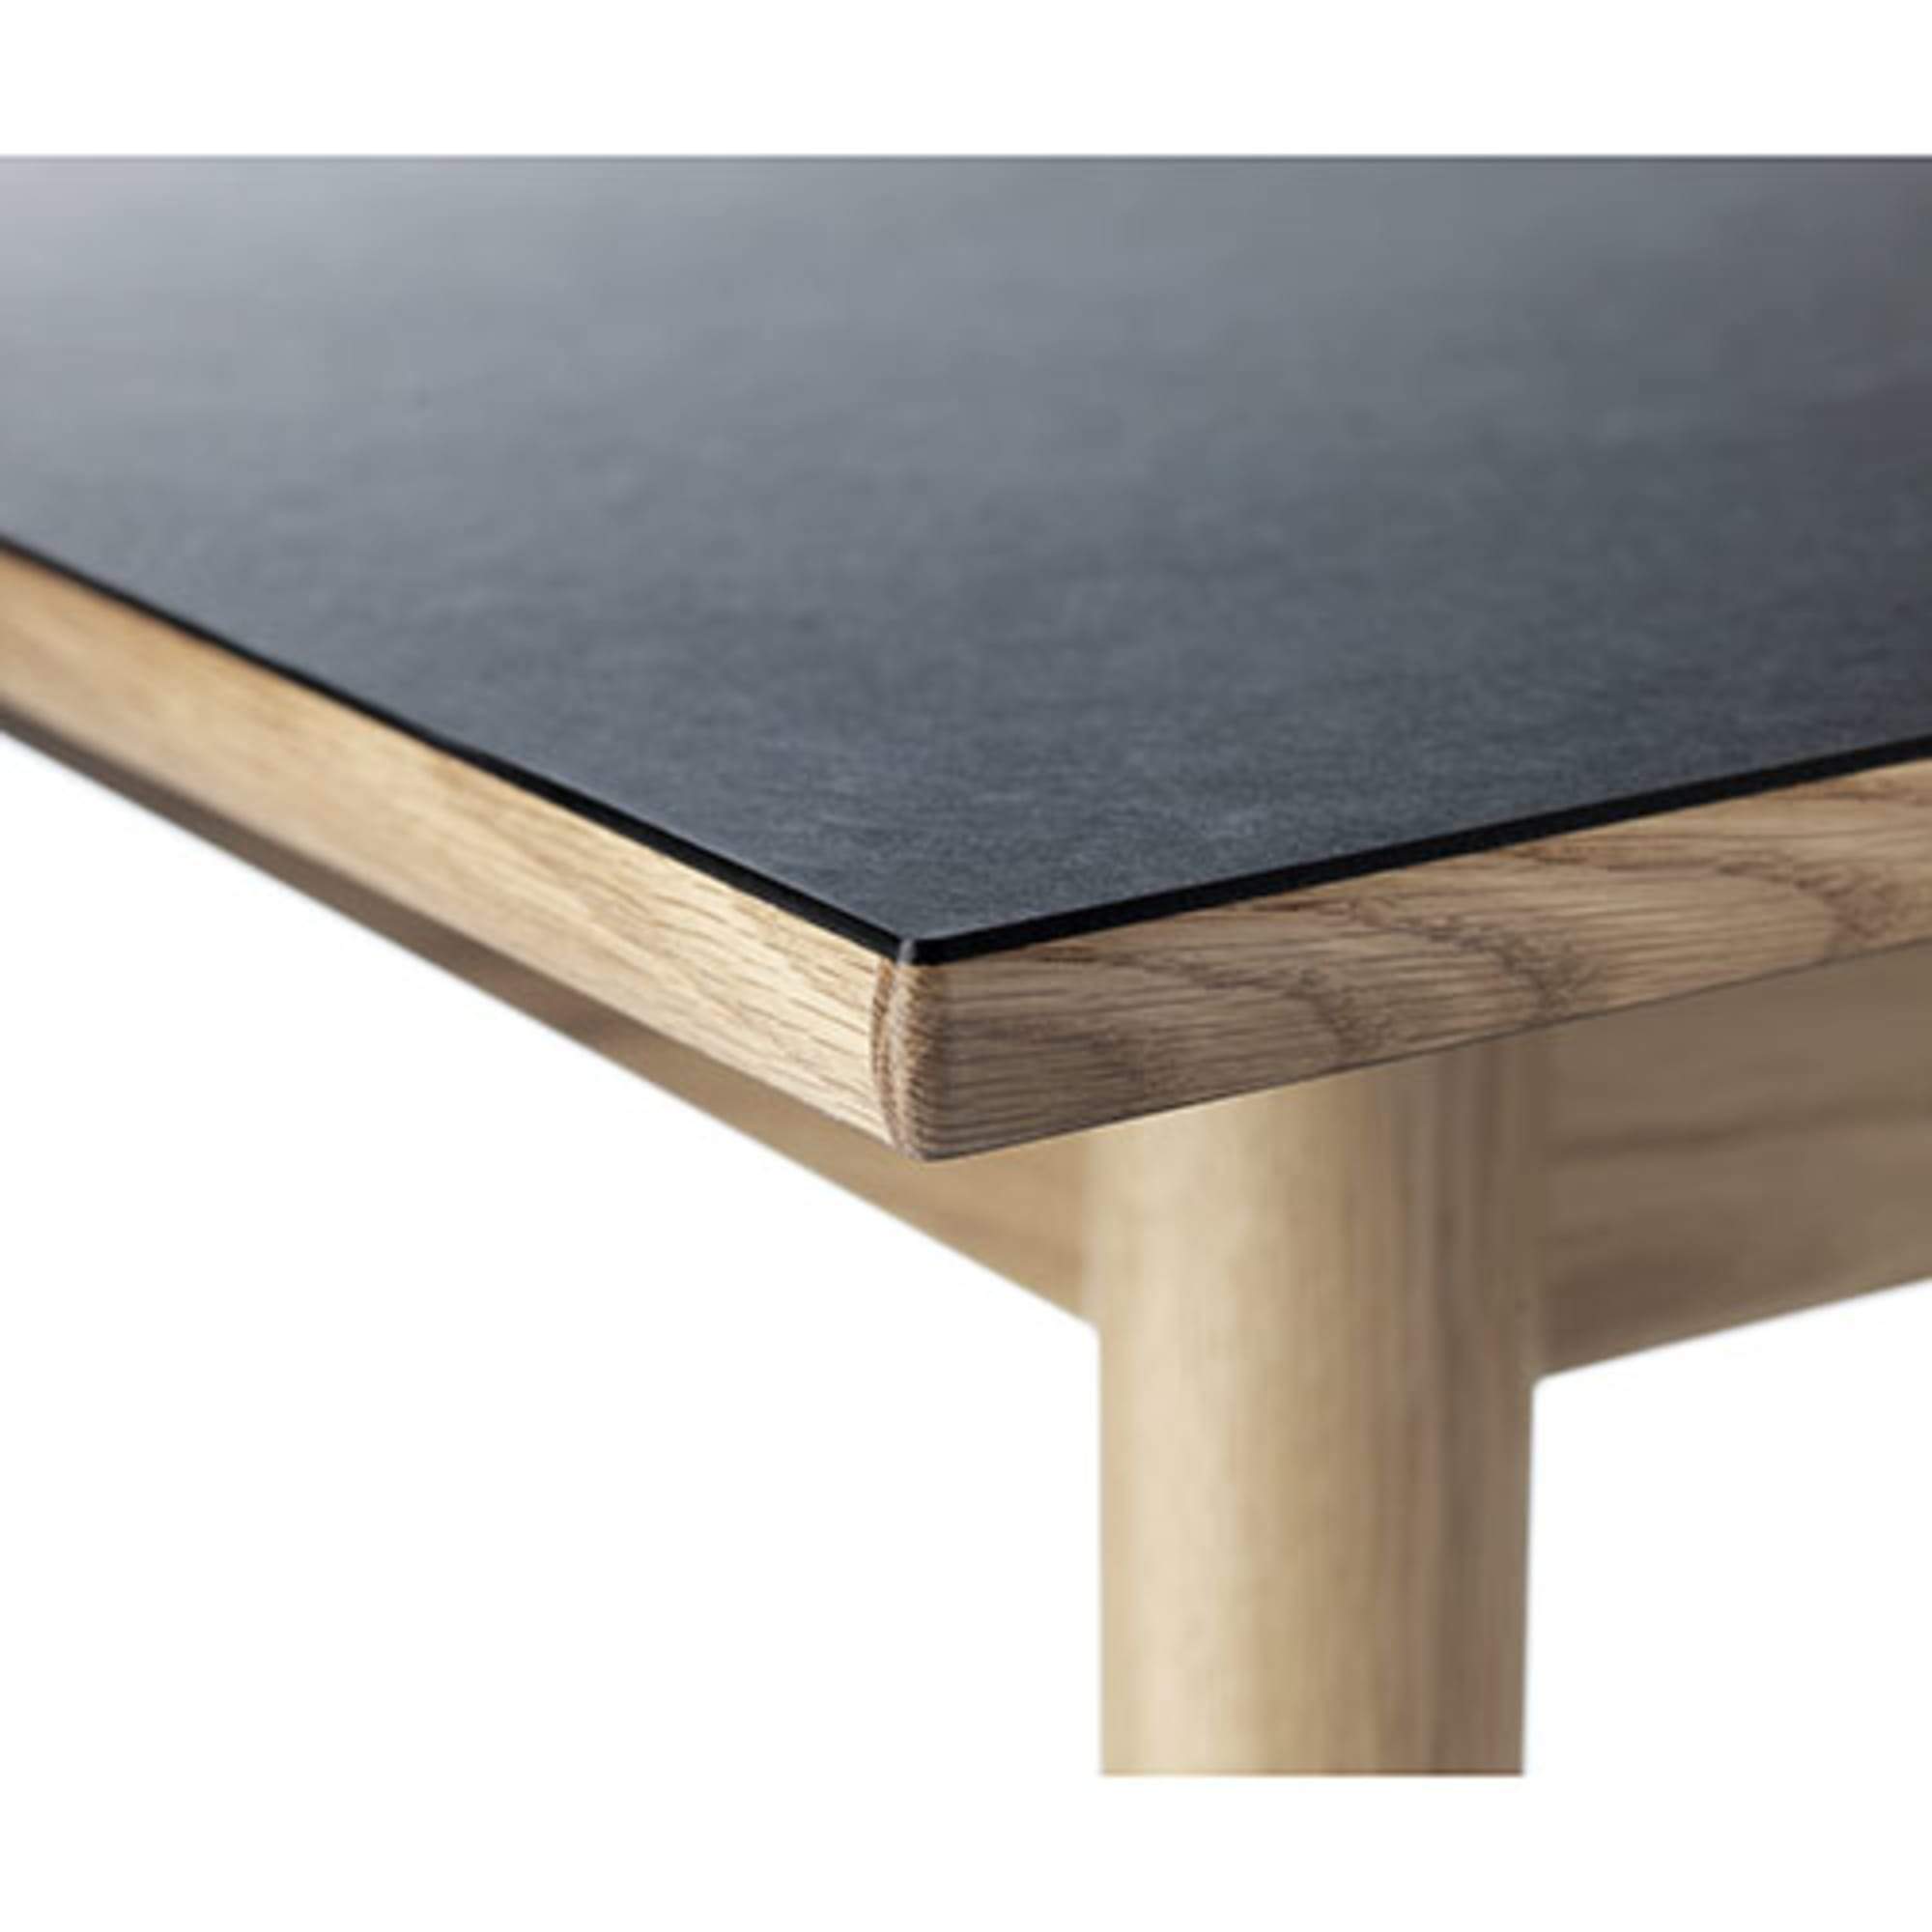 Fdb Møbler C35 B Dining Table For 6 Persons Oak, Black Linoleum Top, 82x160cm